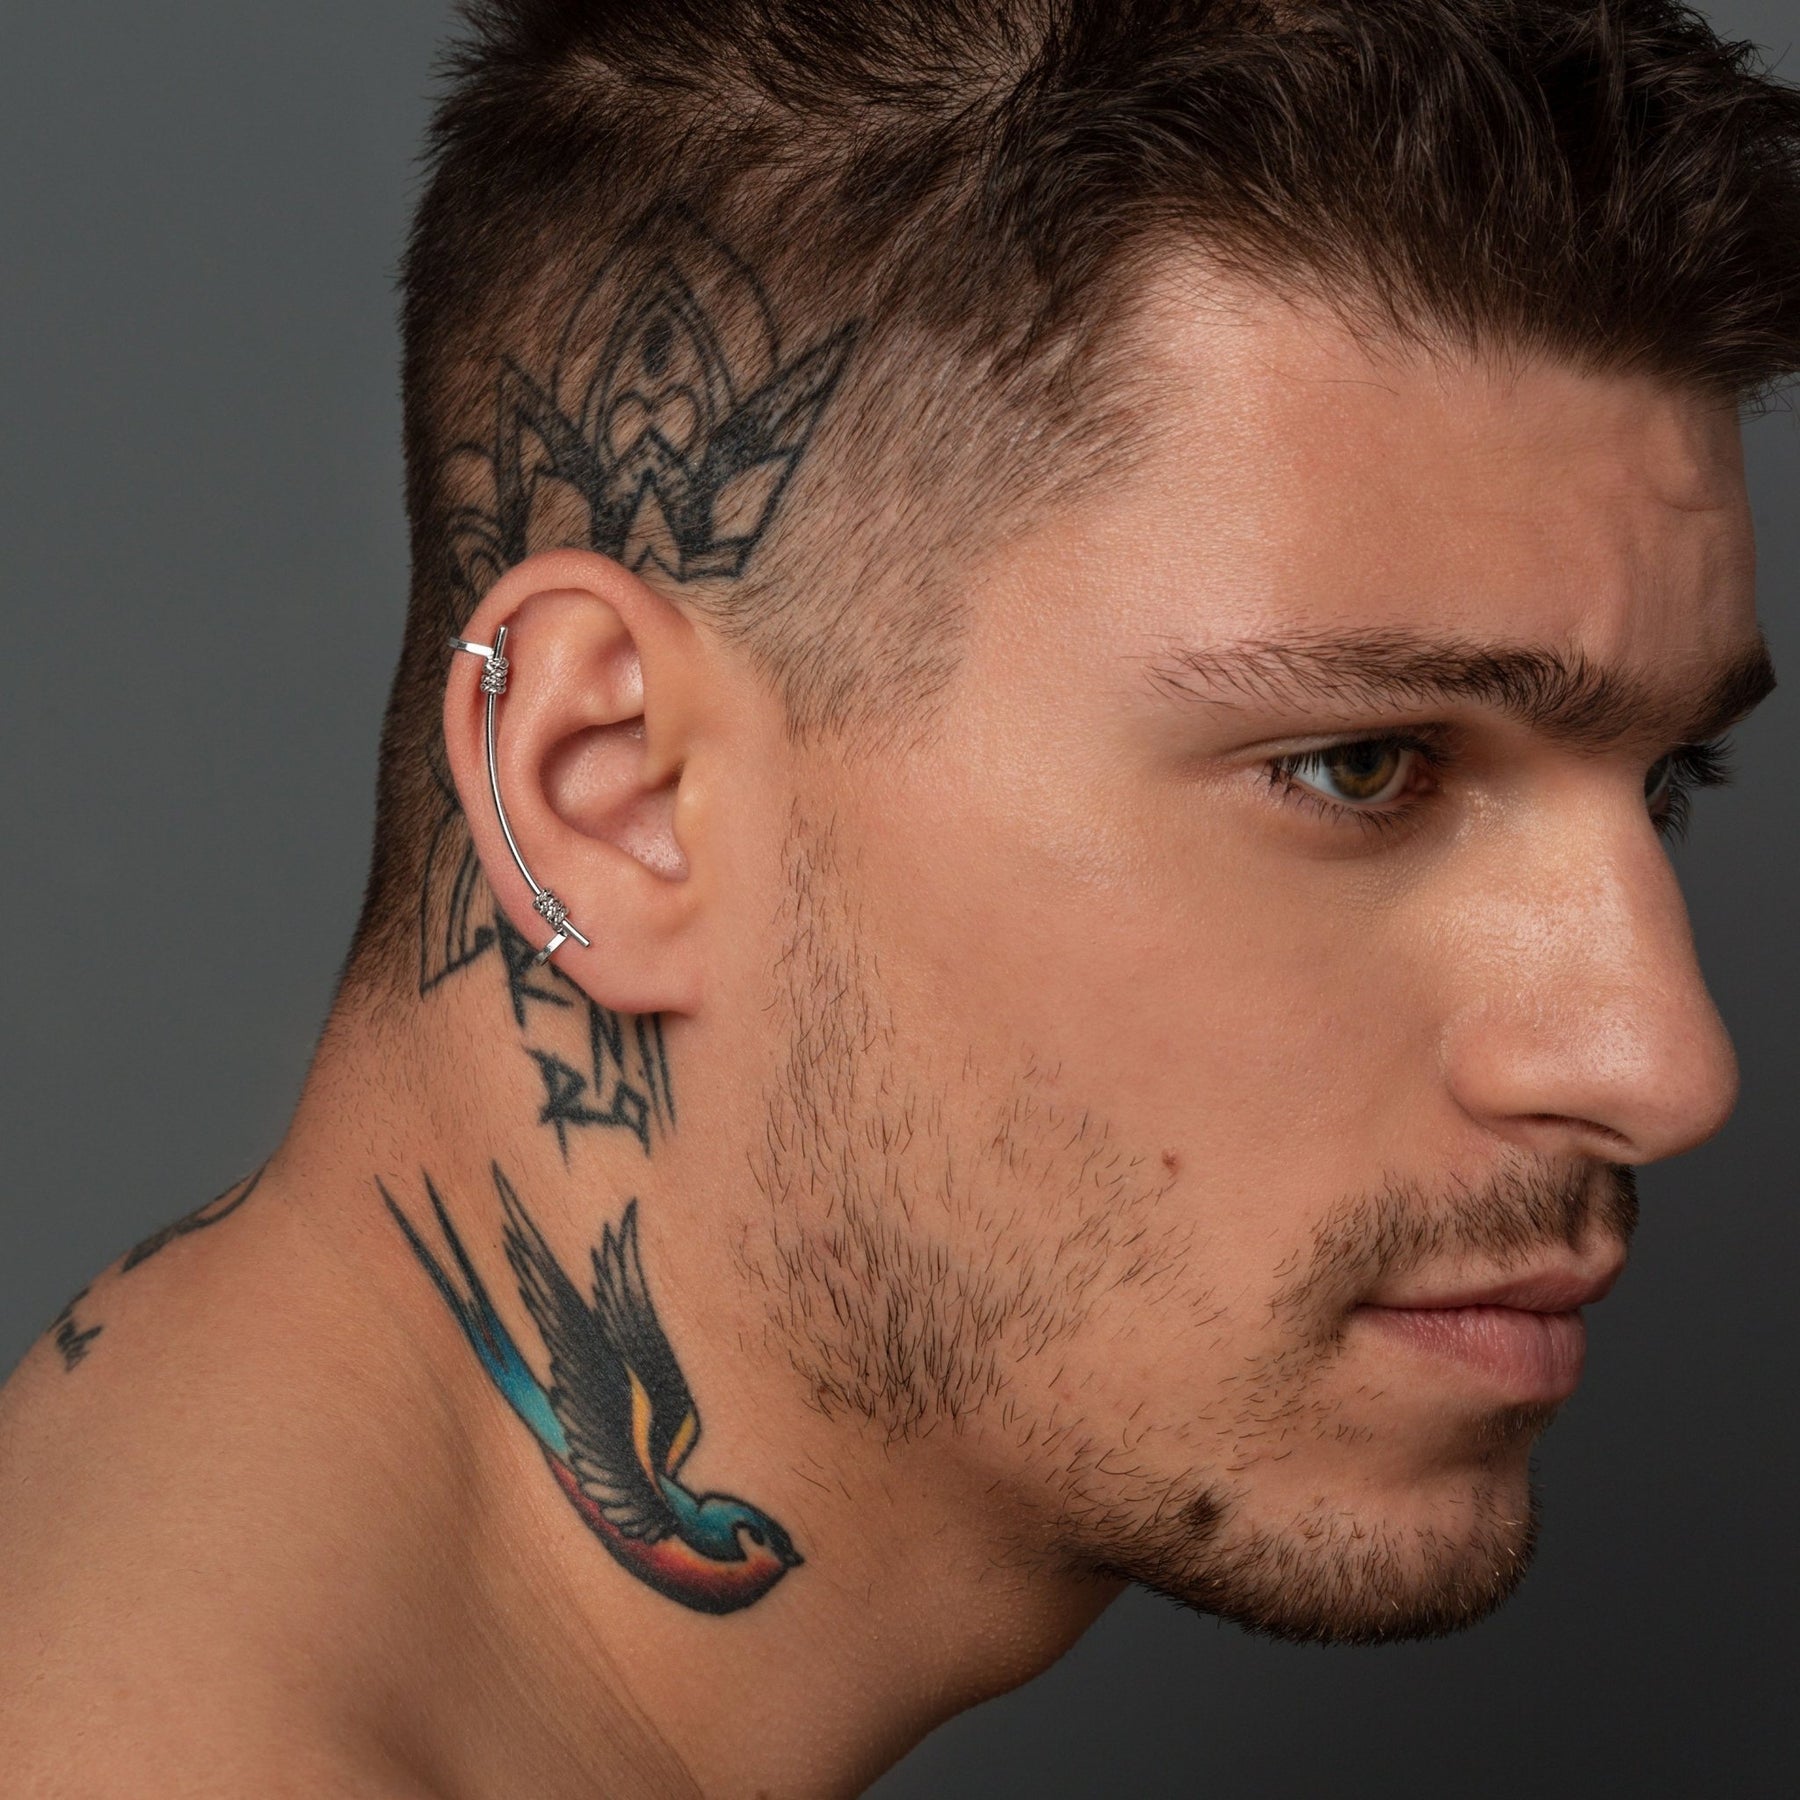 Vitaly Machina Ear Cuff in Metallic for Men